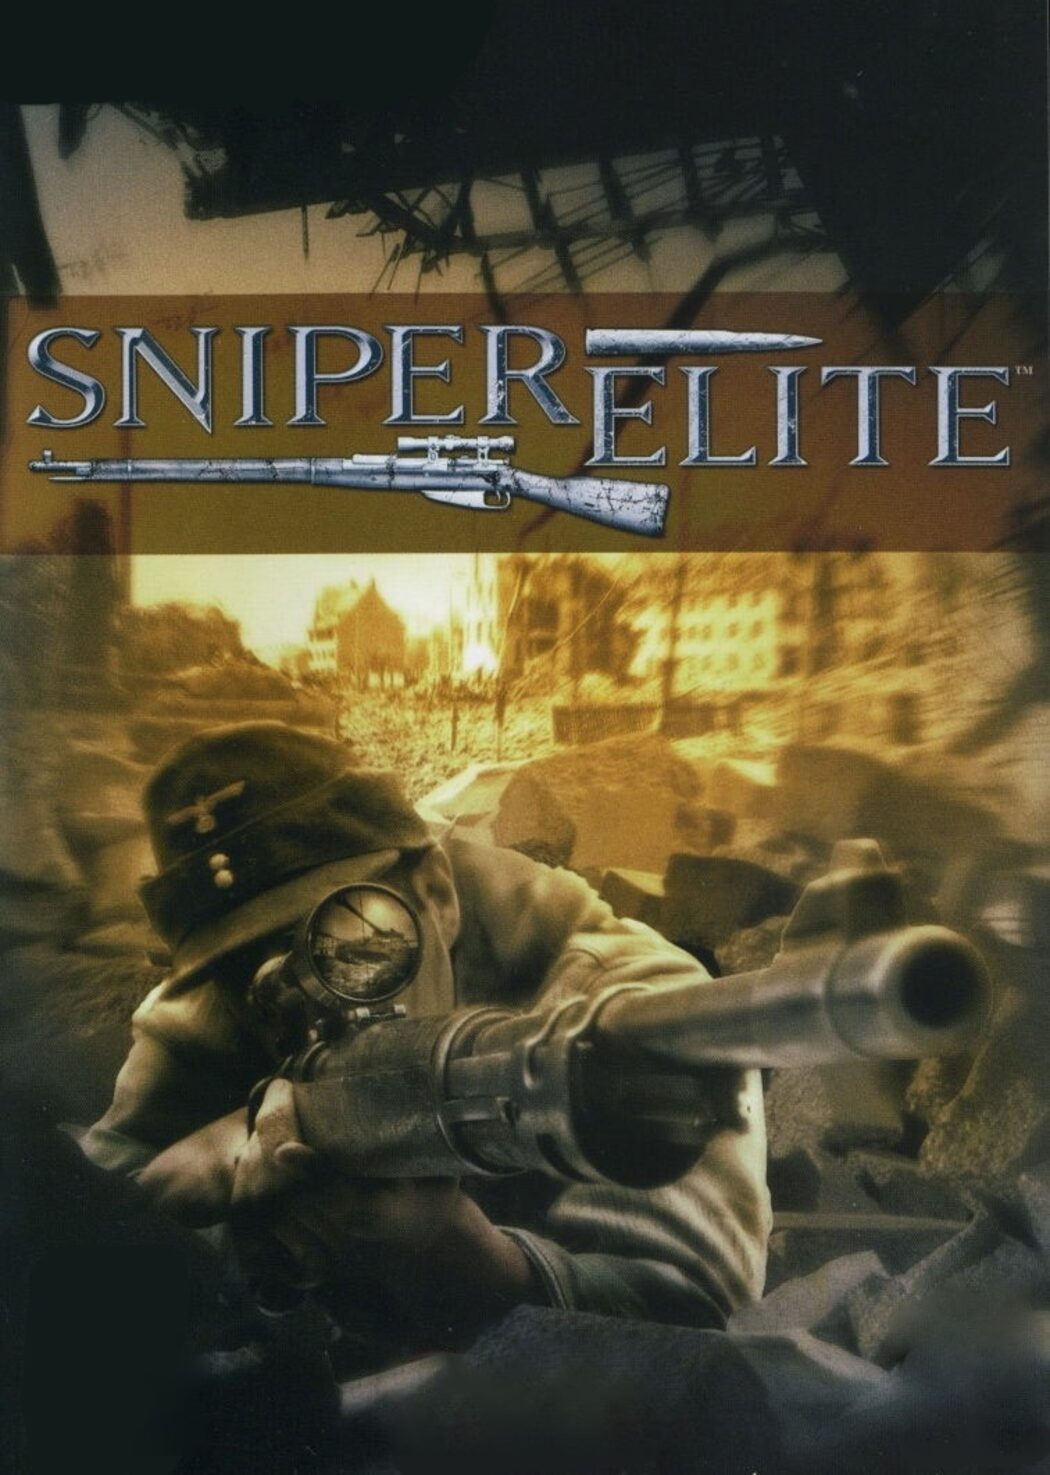 mission-2-bitanti-village-collectibles-in-sniper-elite-4-sniper